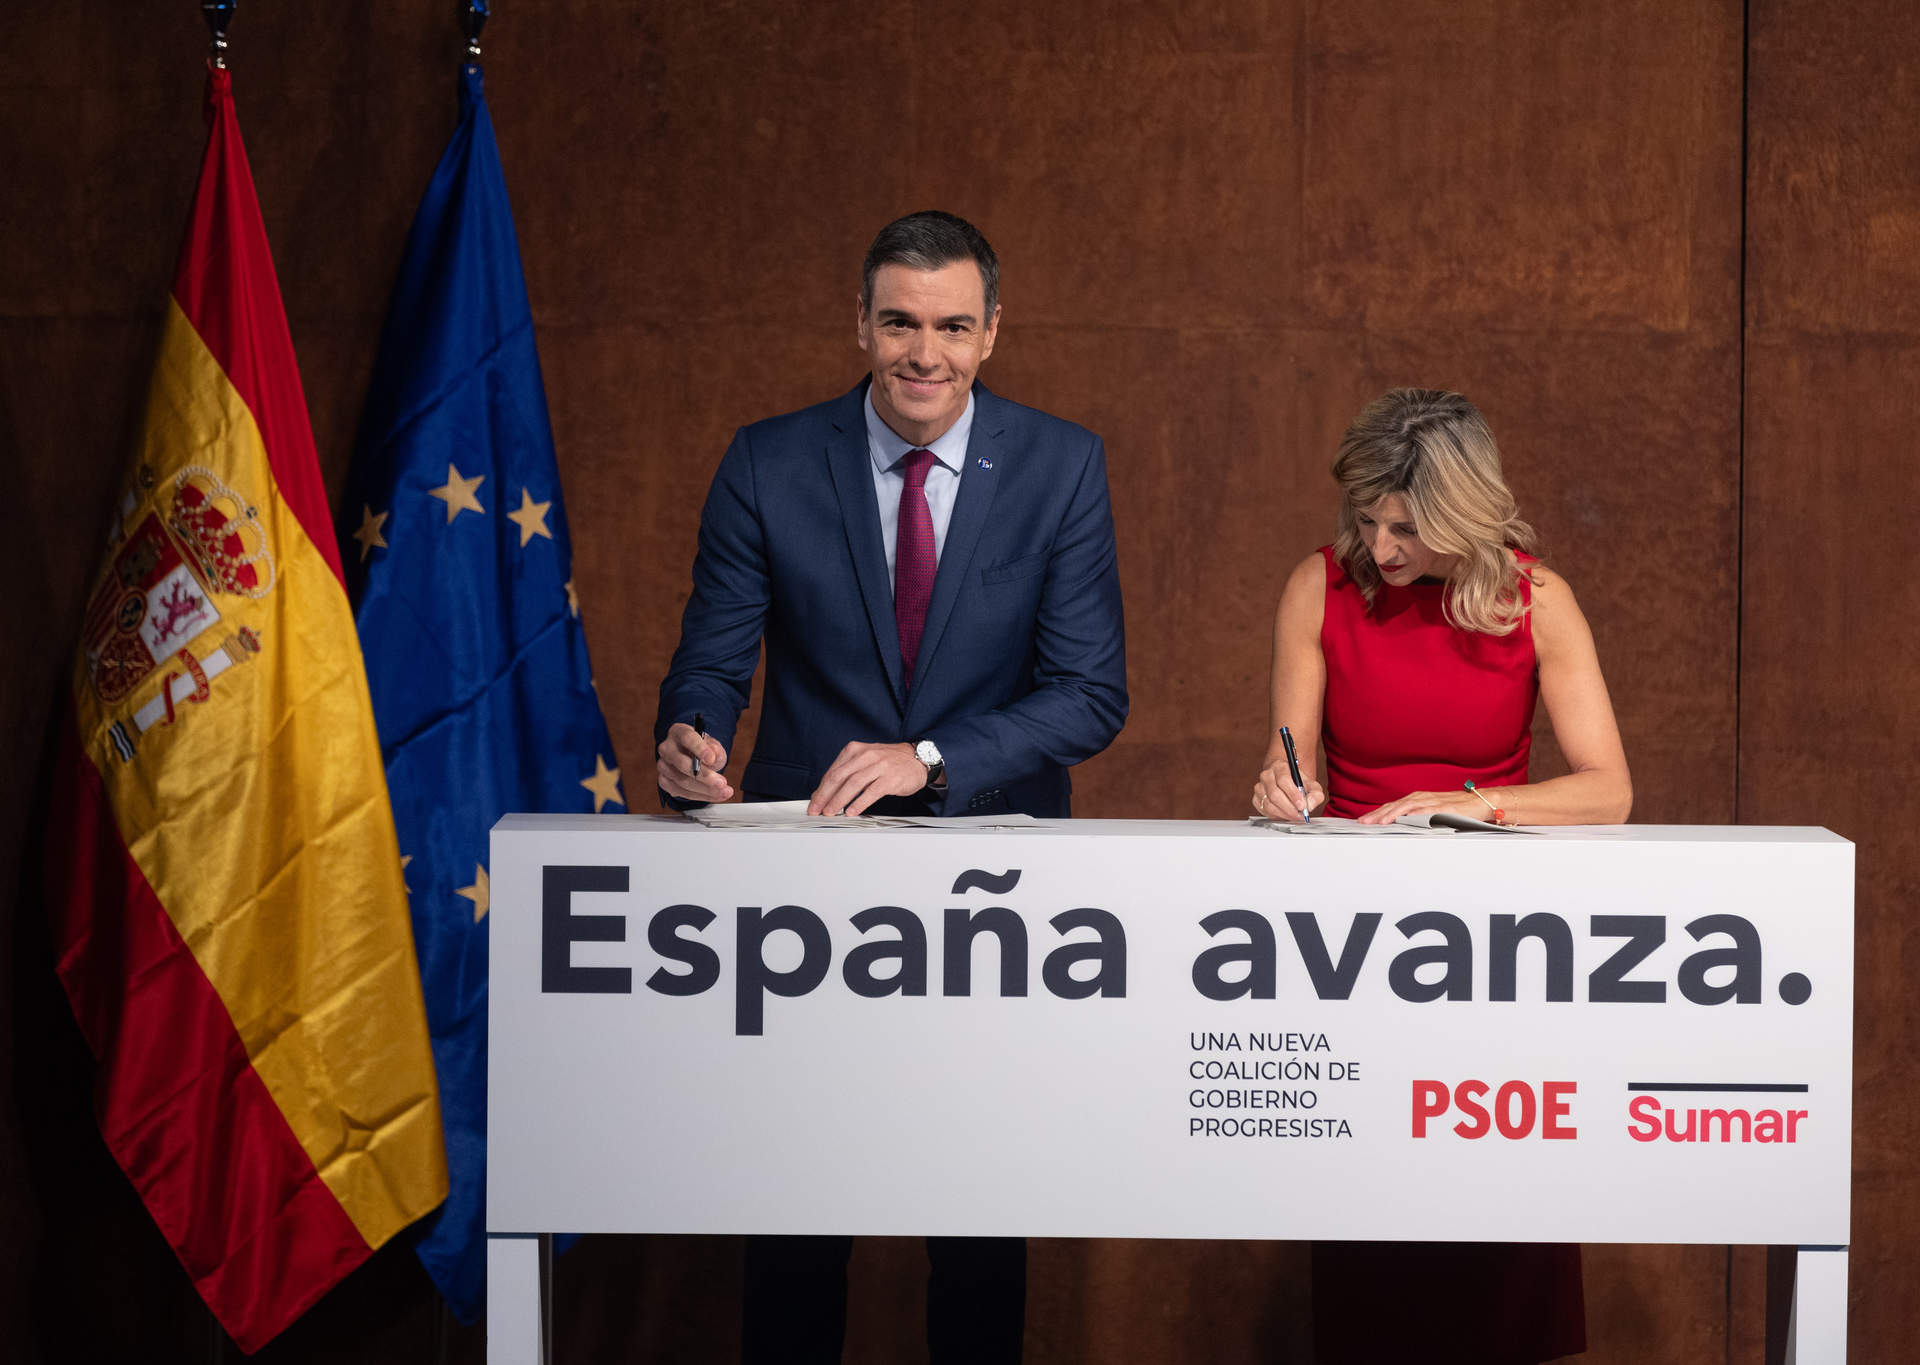 El PSOE incumplió la promesa de tramitar la ley de prostitución después del verano